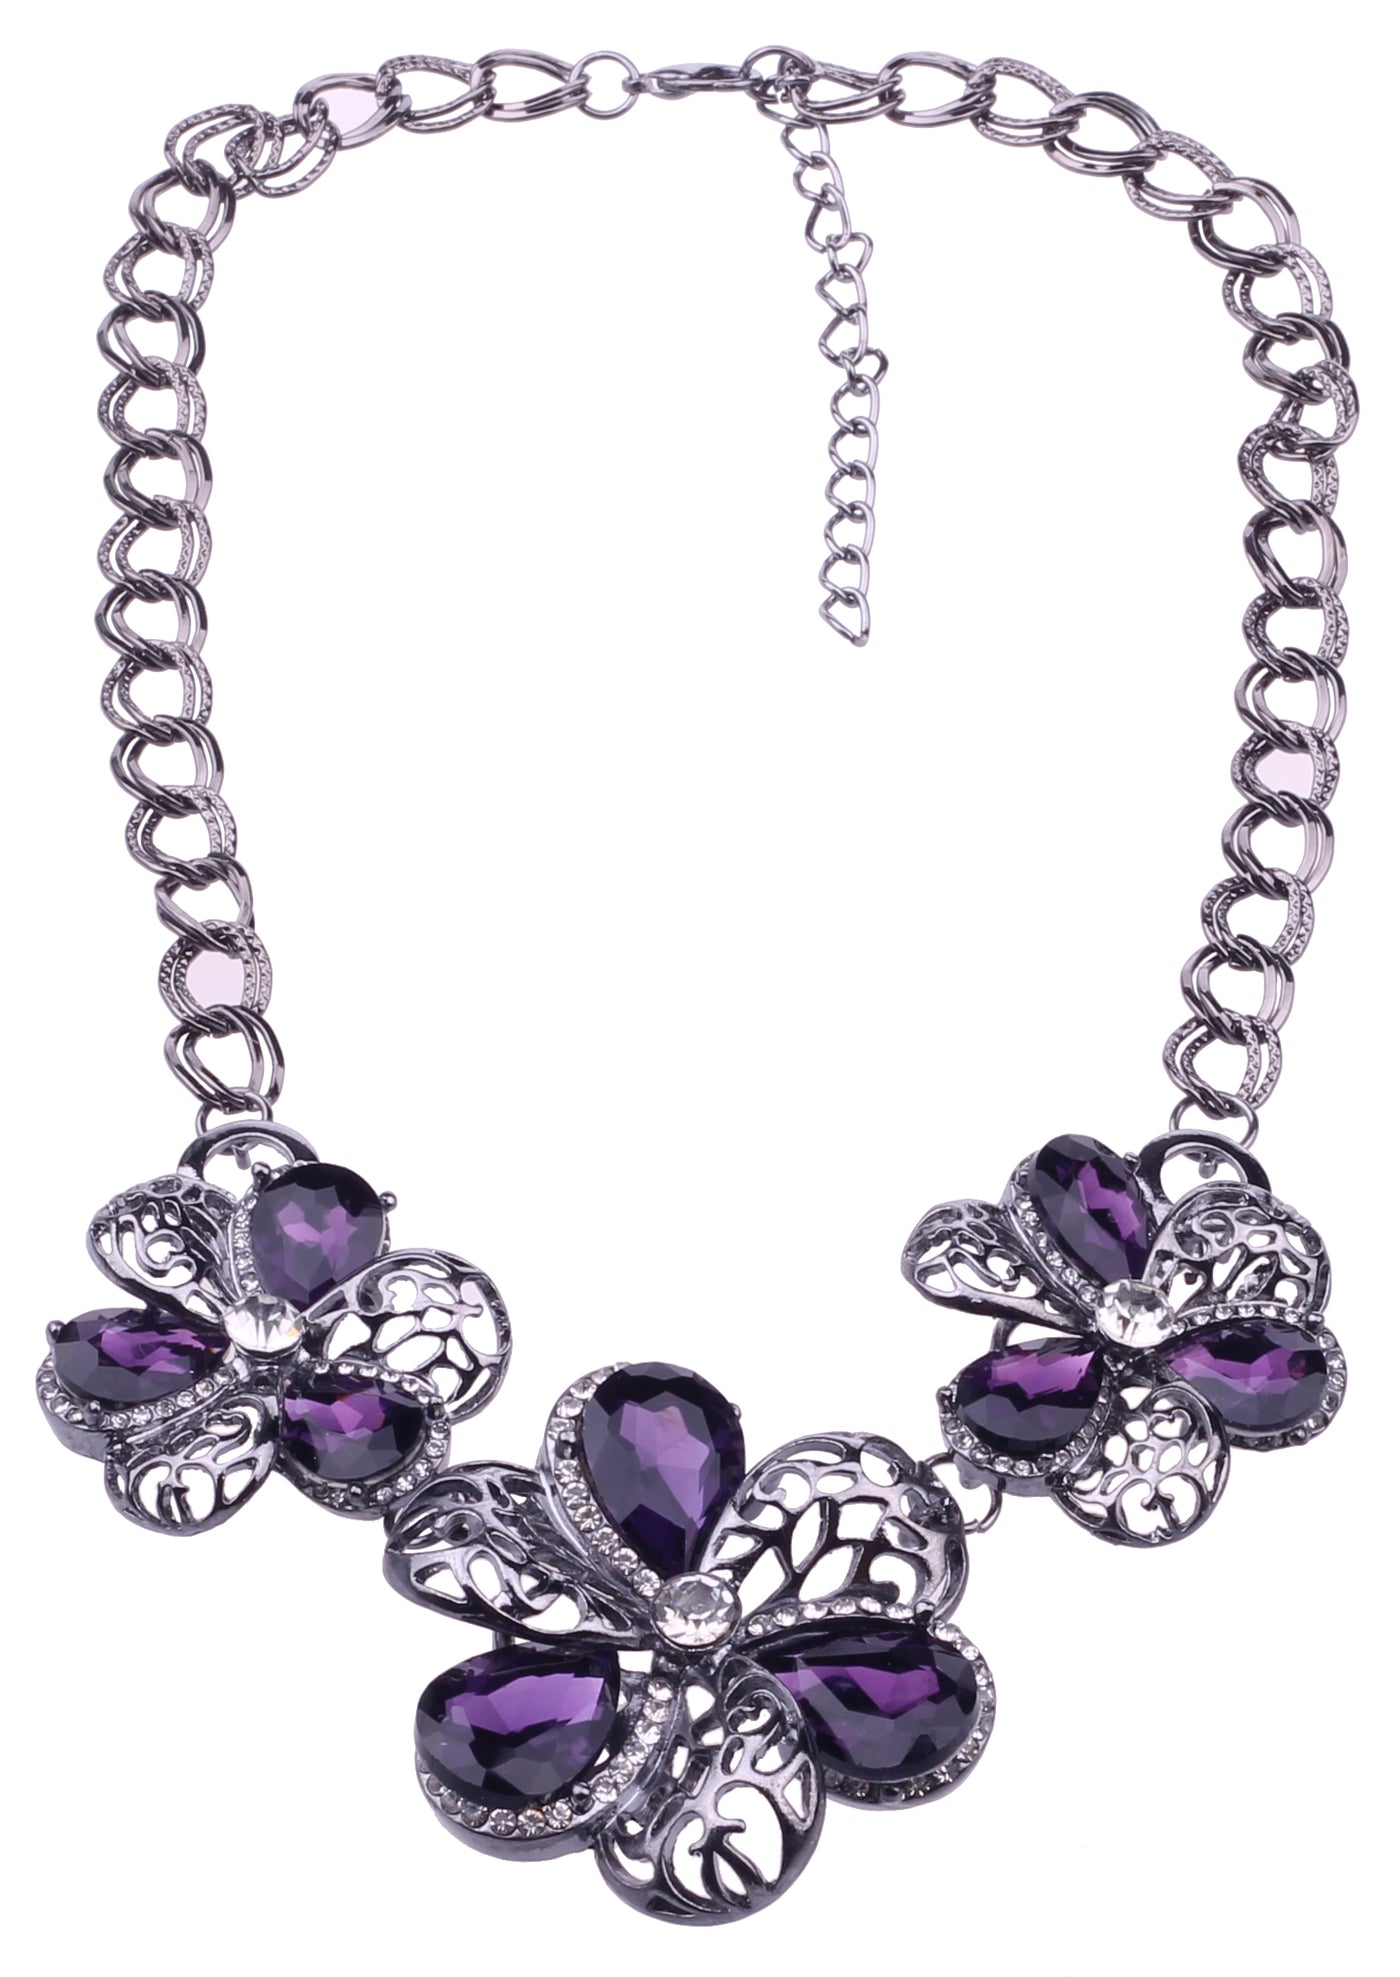 A flower necklace